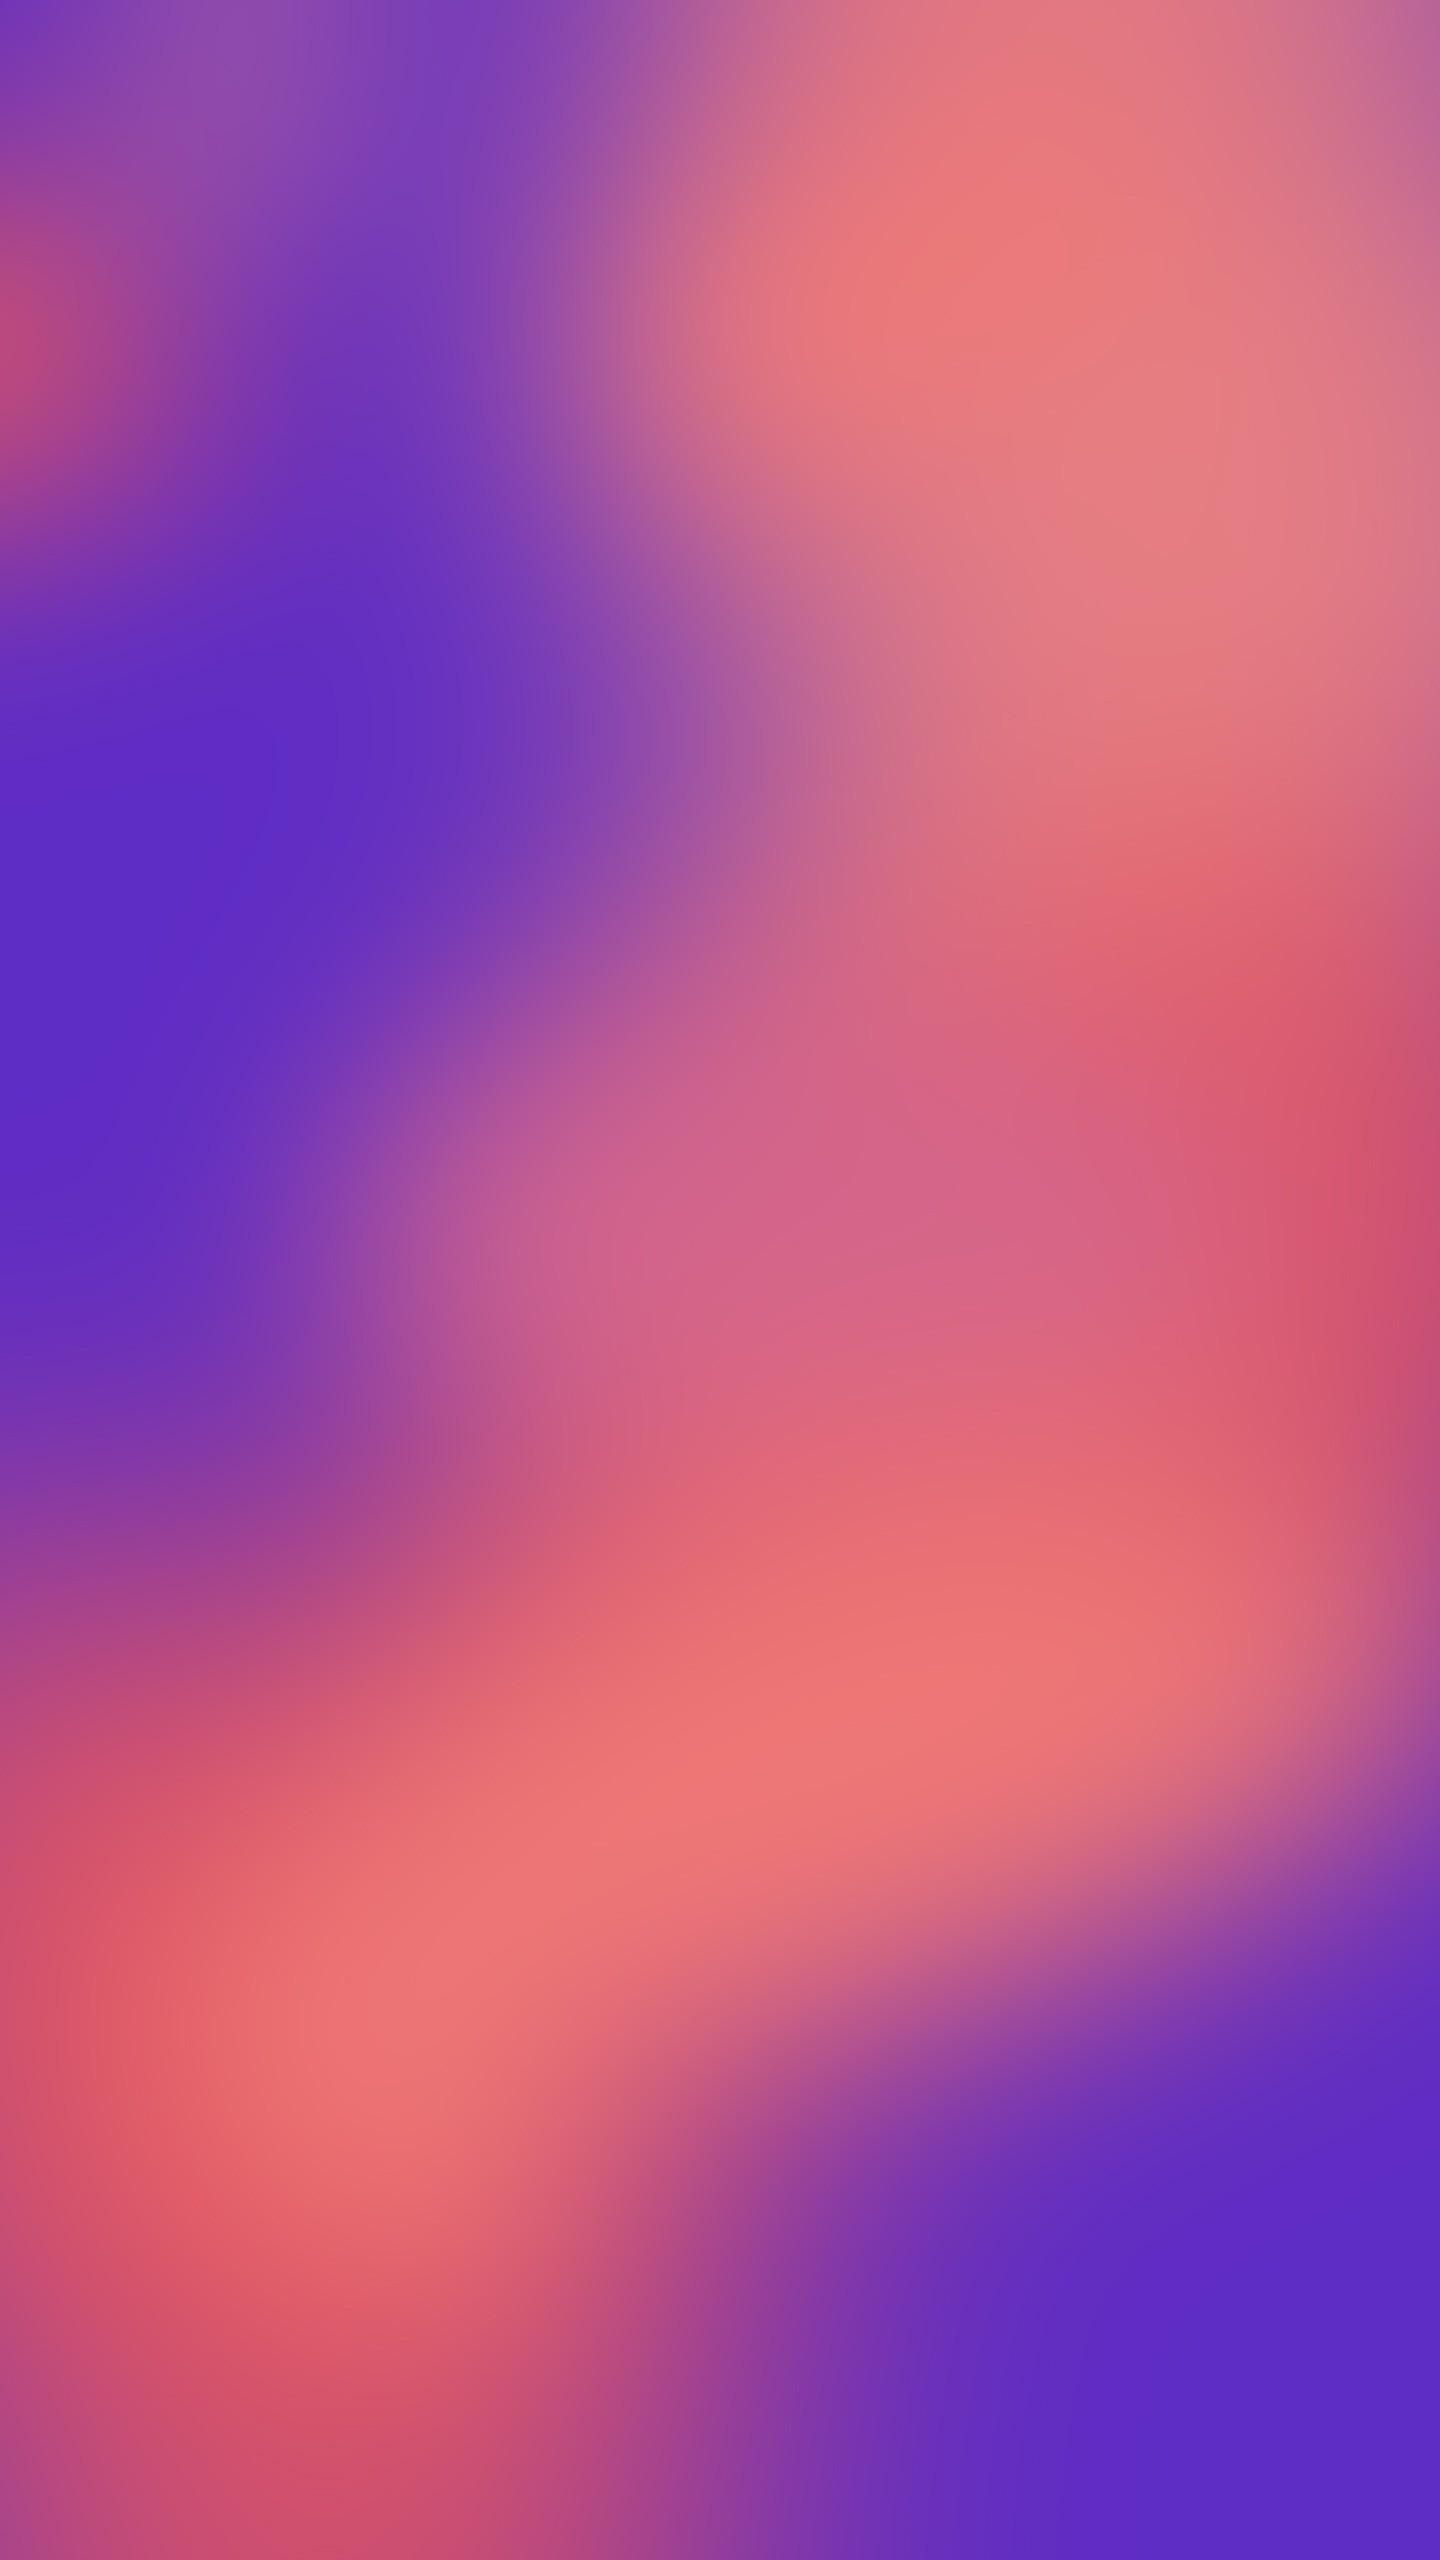 googleピクセルxl壁紙hd,ピンク,バイオレット,空,紫の,青い